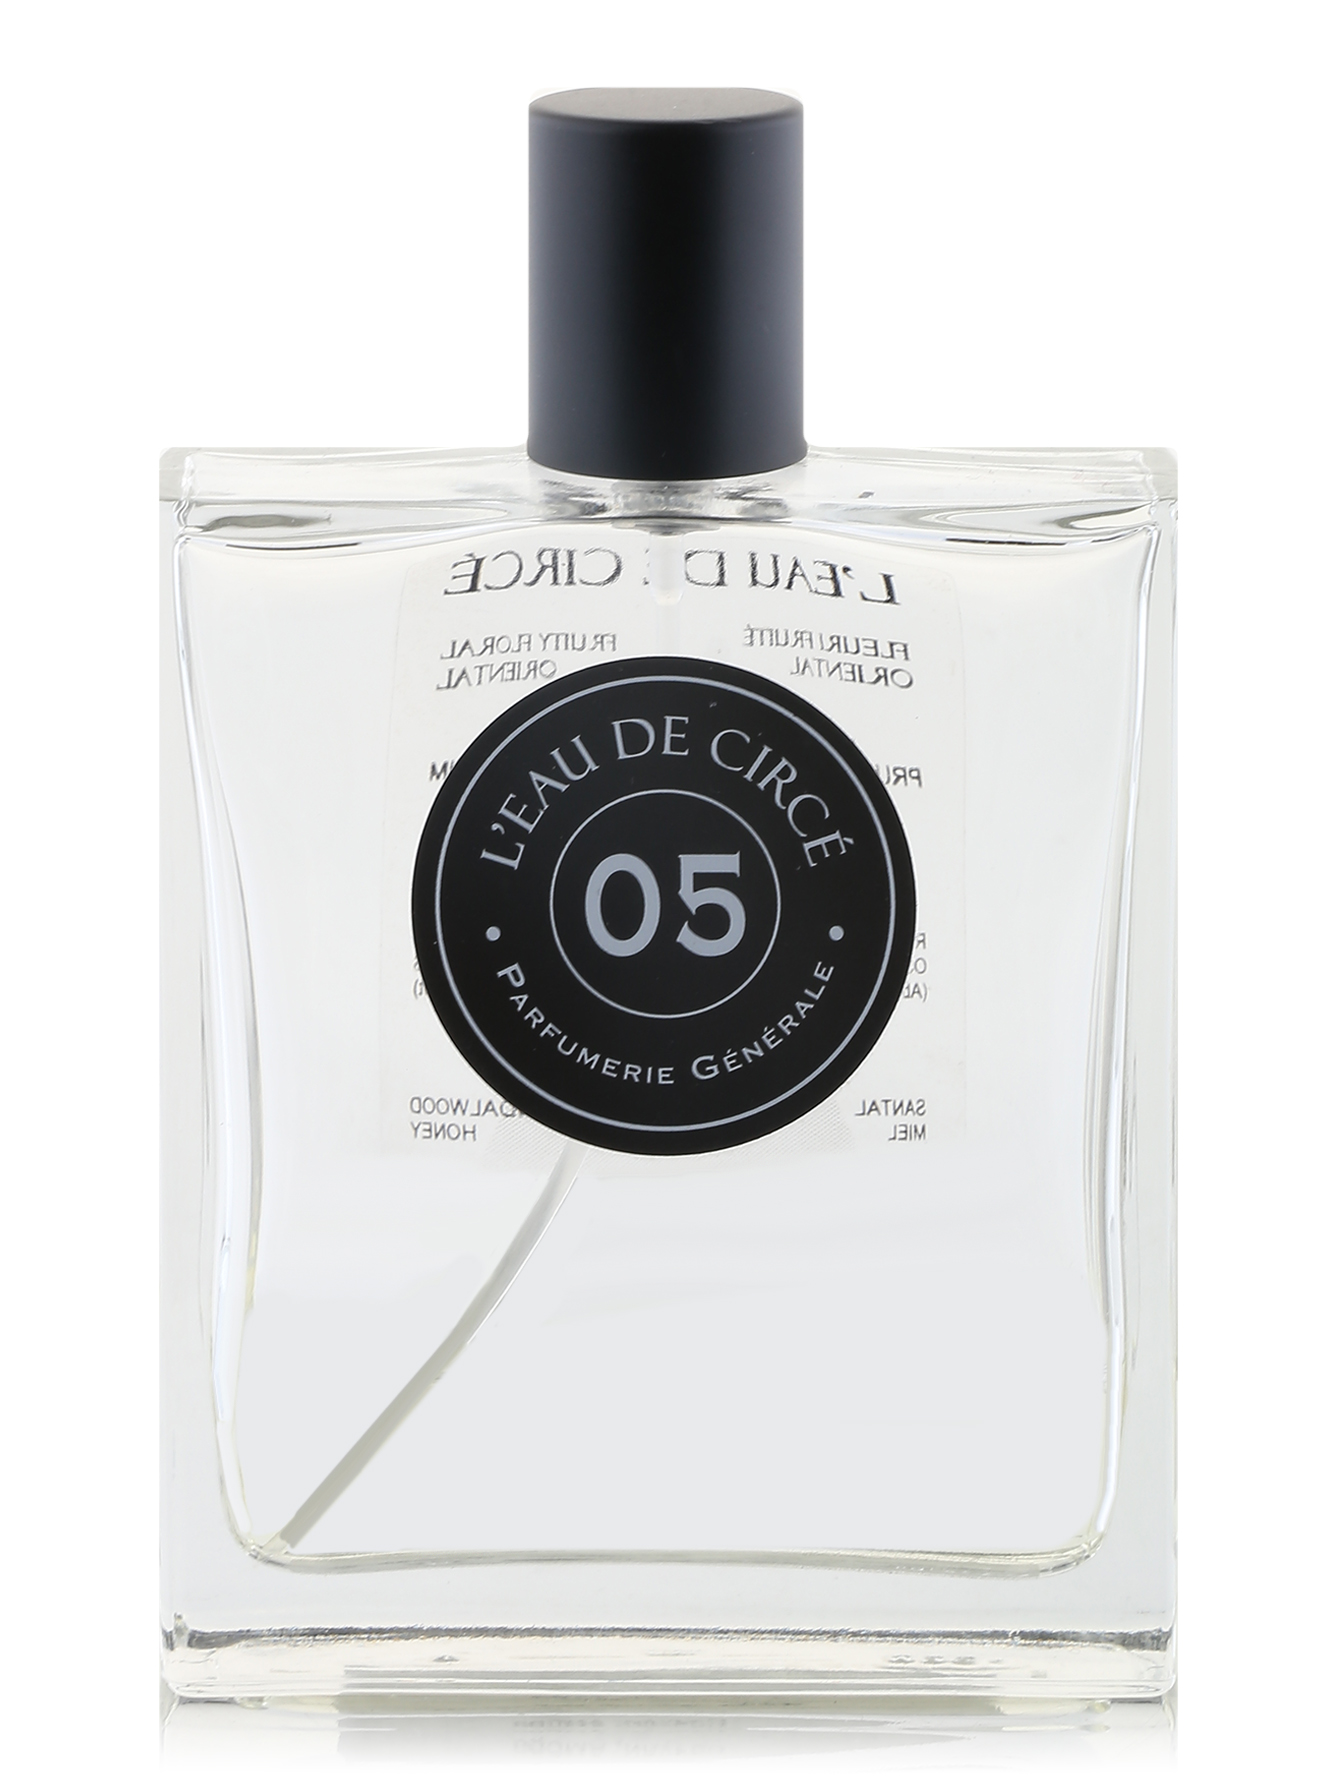  Парфюмерная вода - L'Eau de Circe Generale Parfumerie,100ml - Общий вид